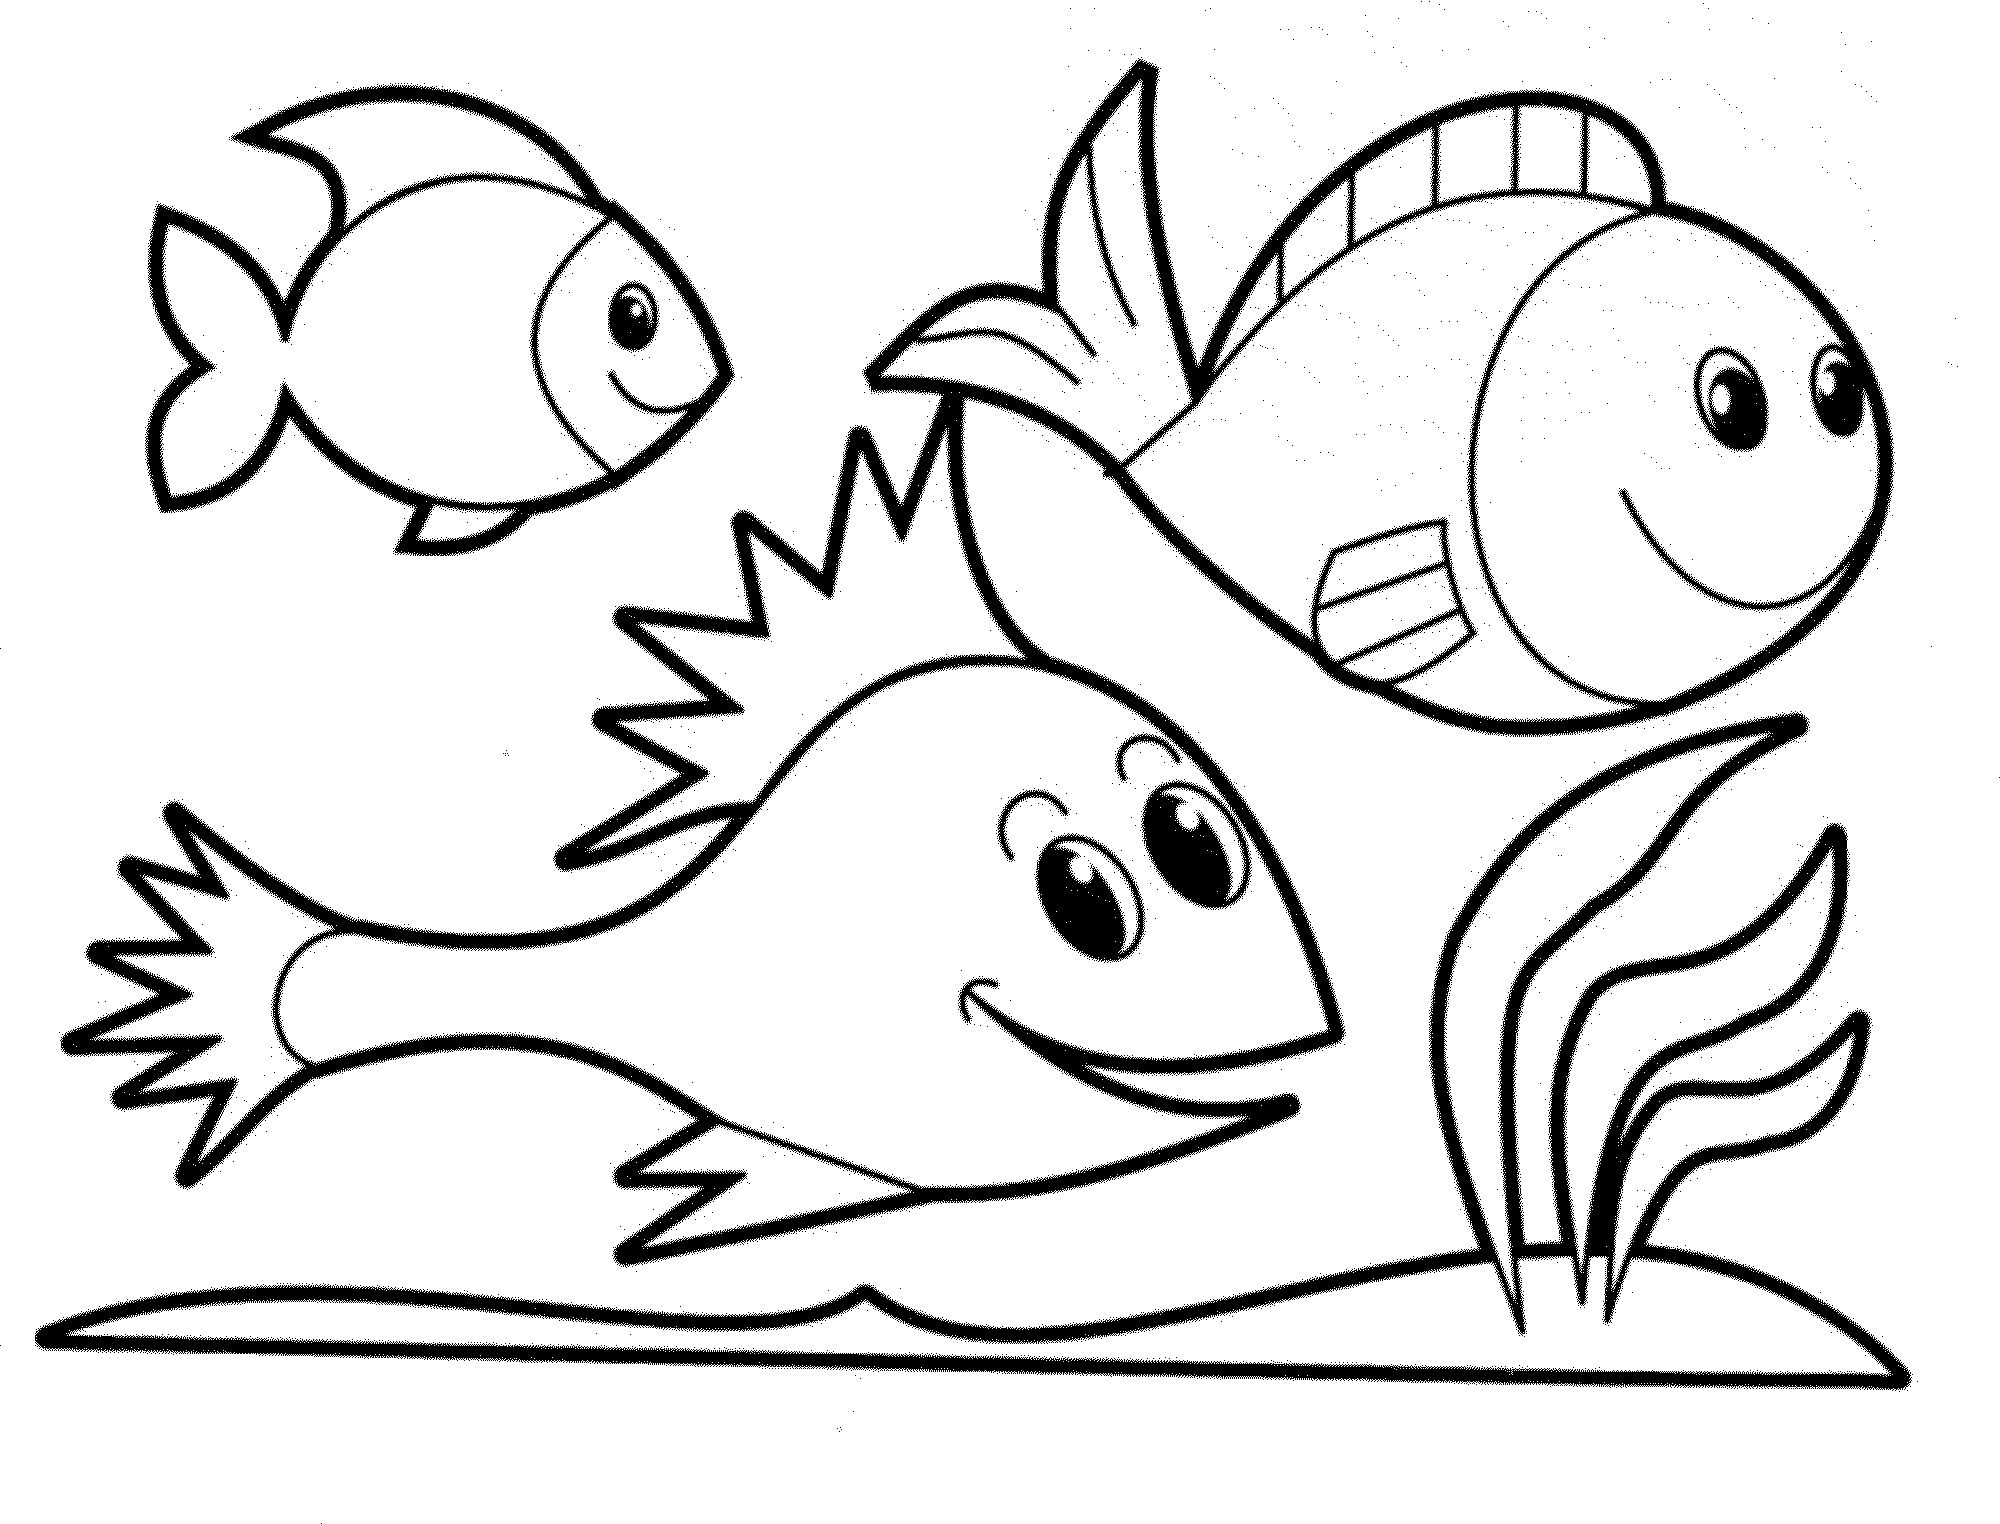 Coloring Fish Free Printable Fish Coloring Pages For Kids - Free Printable Fish Coloring Pages